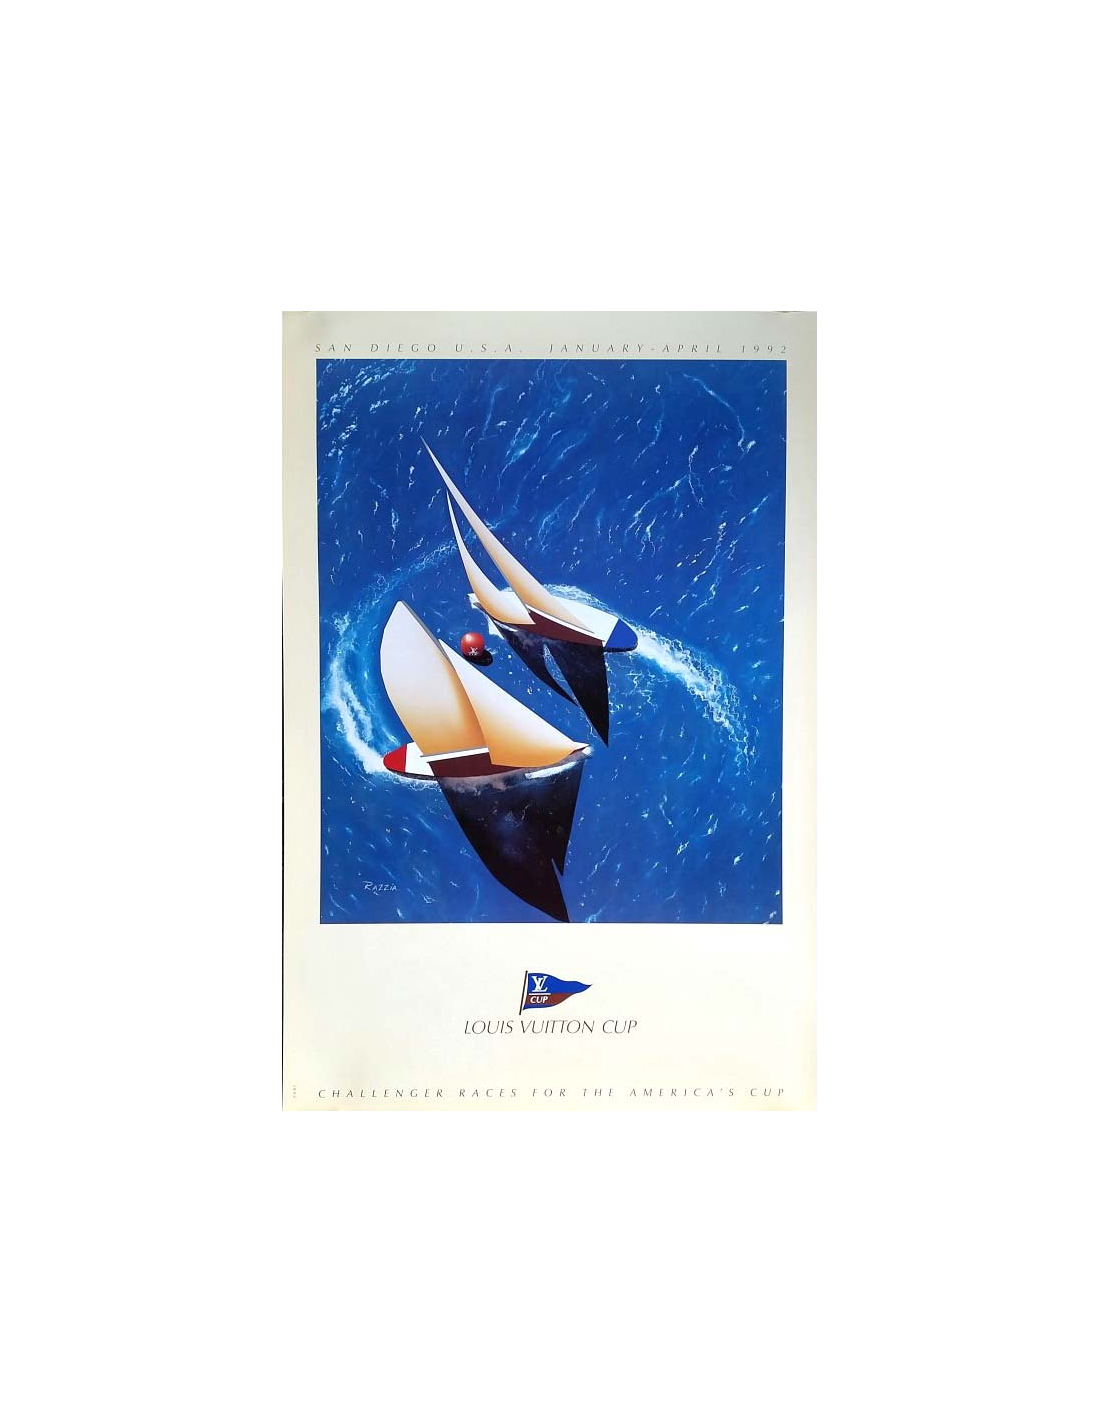 Louis Vuitton Classic 2004 - Razzia Original Vintage Poster